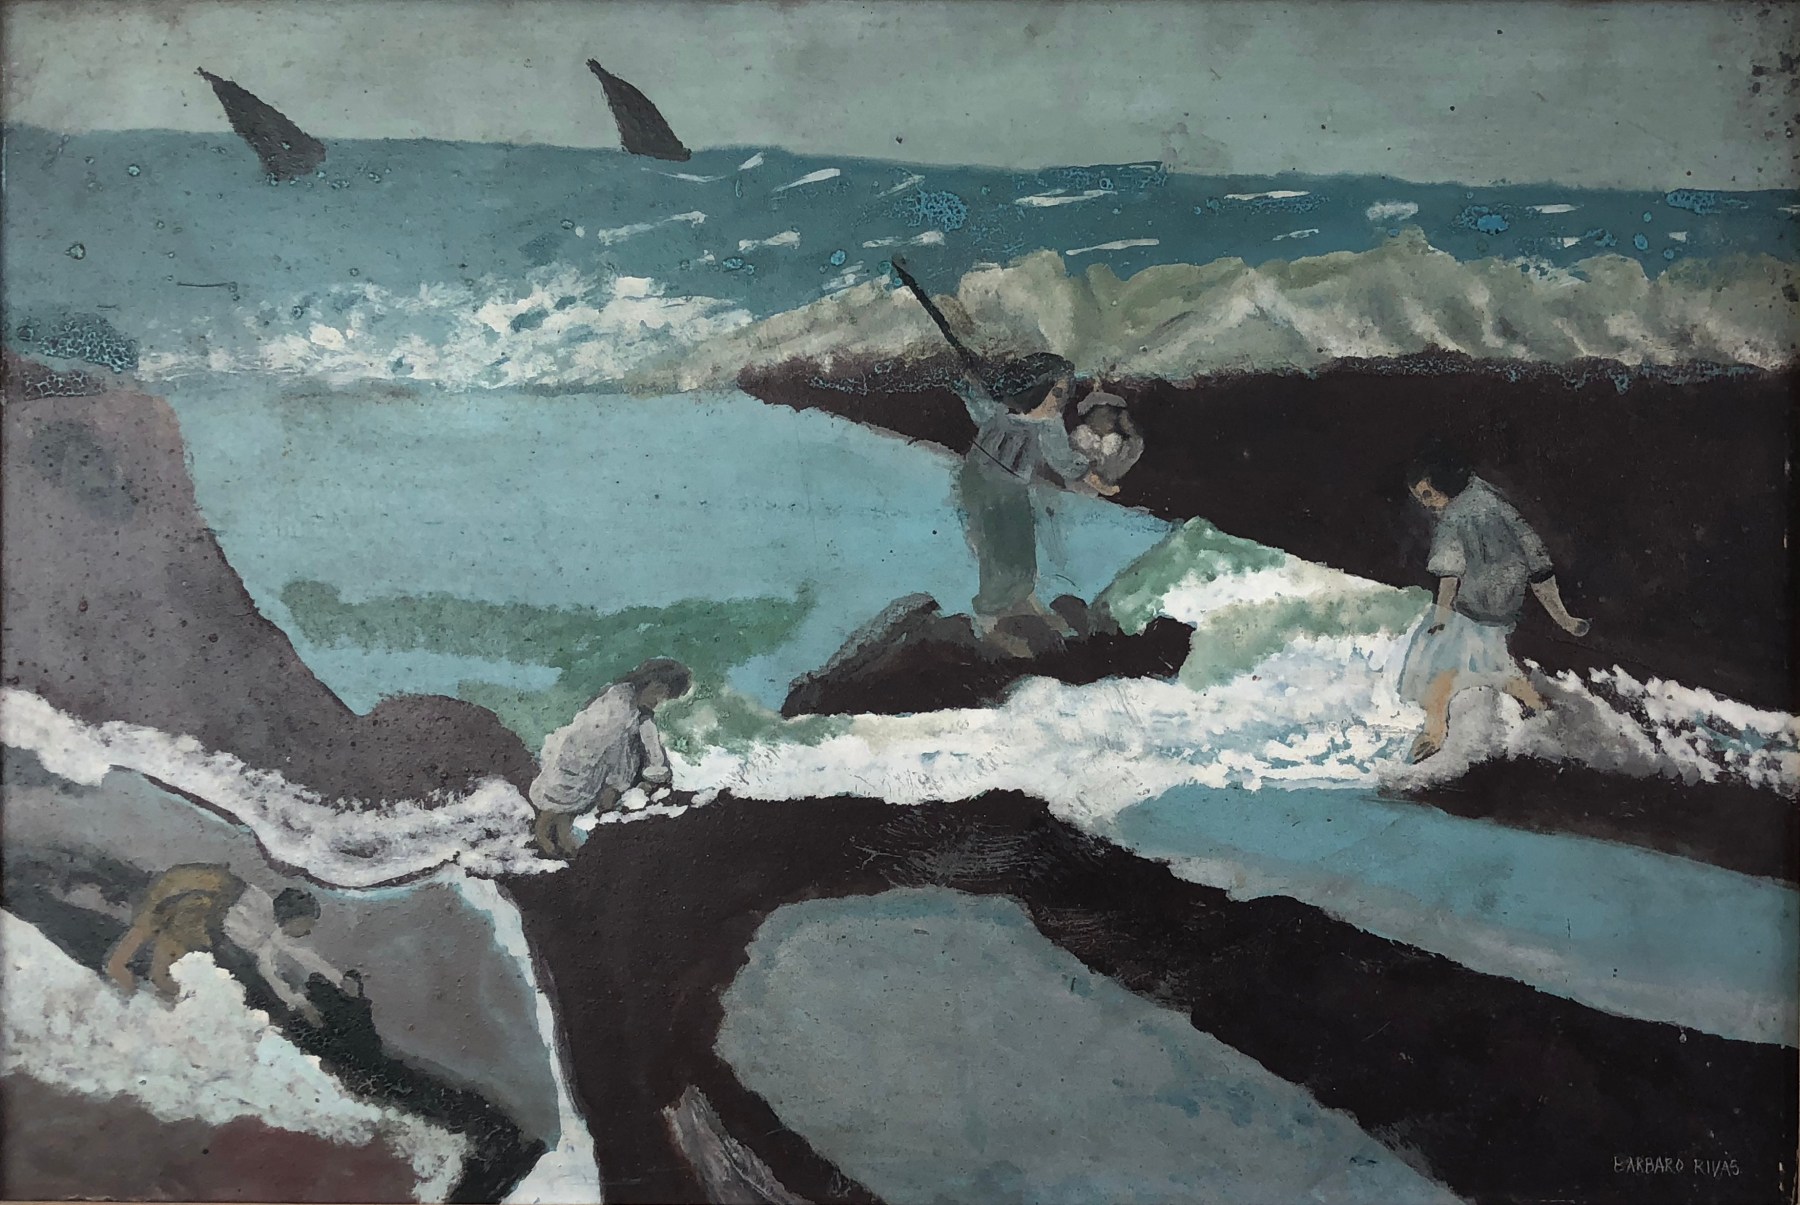 Bárbaro Rivas&nbsp;(1893-1967) Venezuela, La pesca milagrosa (The Miraculous Fishing), c. 1965, Enamel paint on Masonite, 13 x 19.25 in